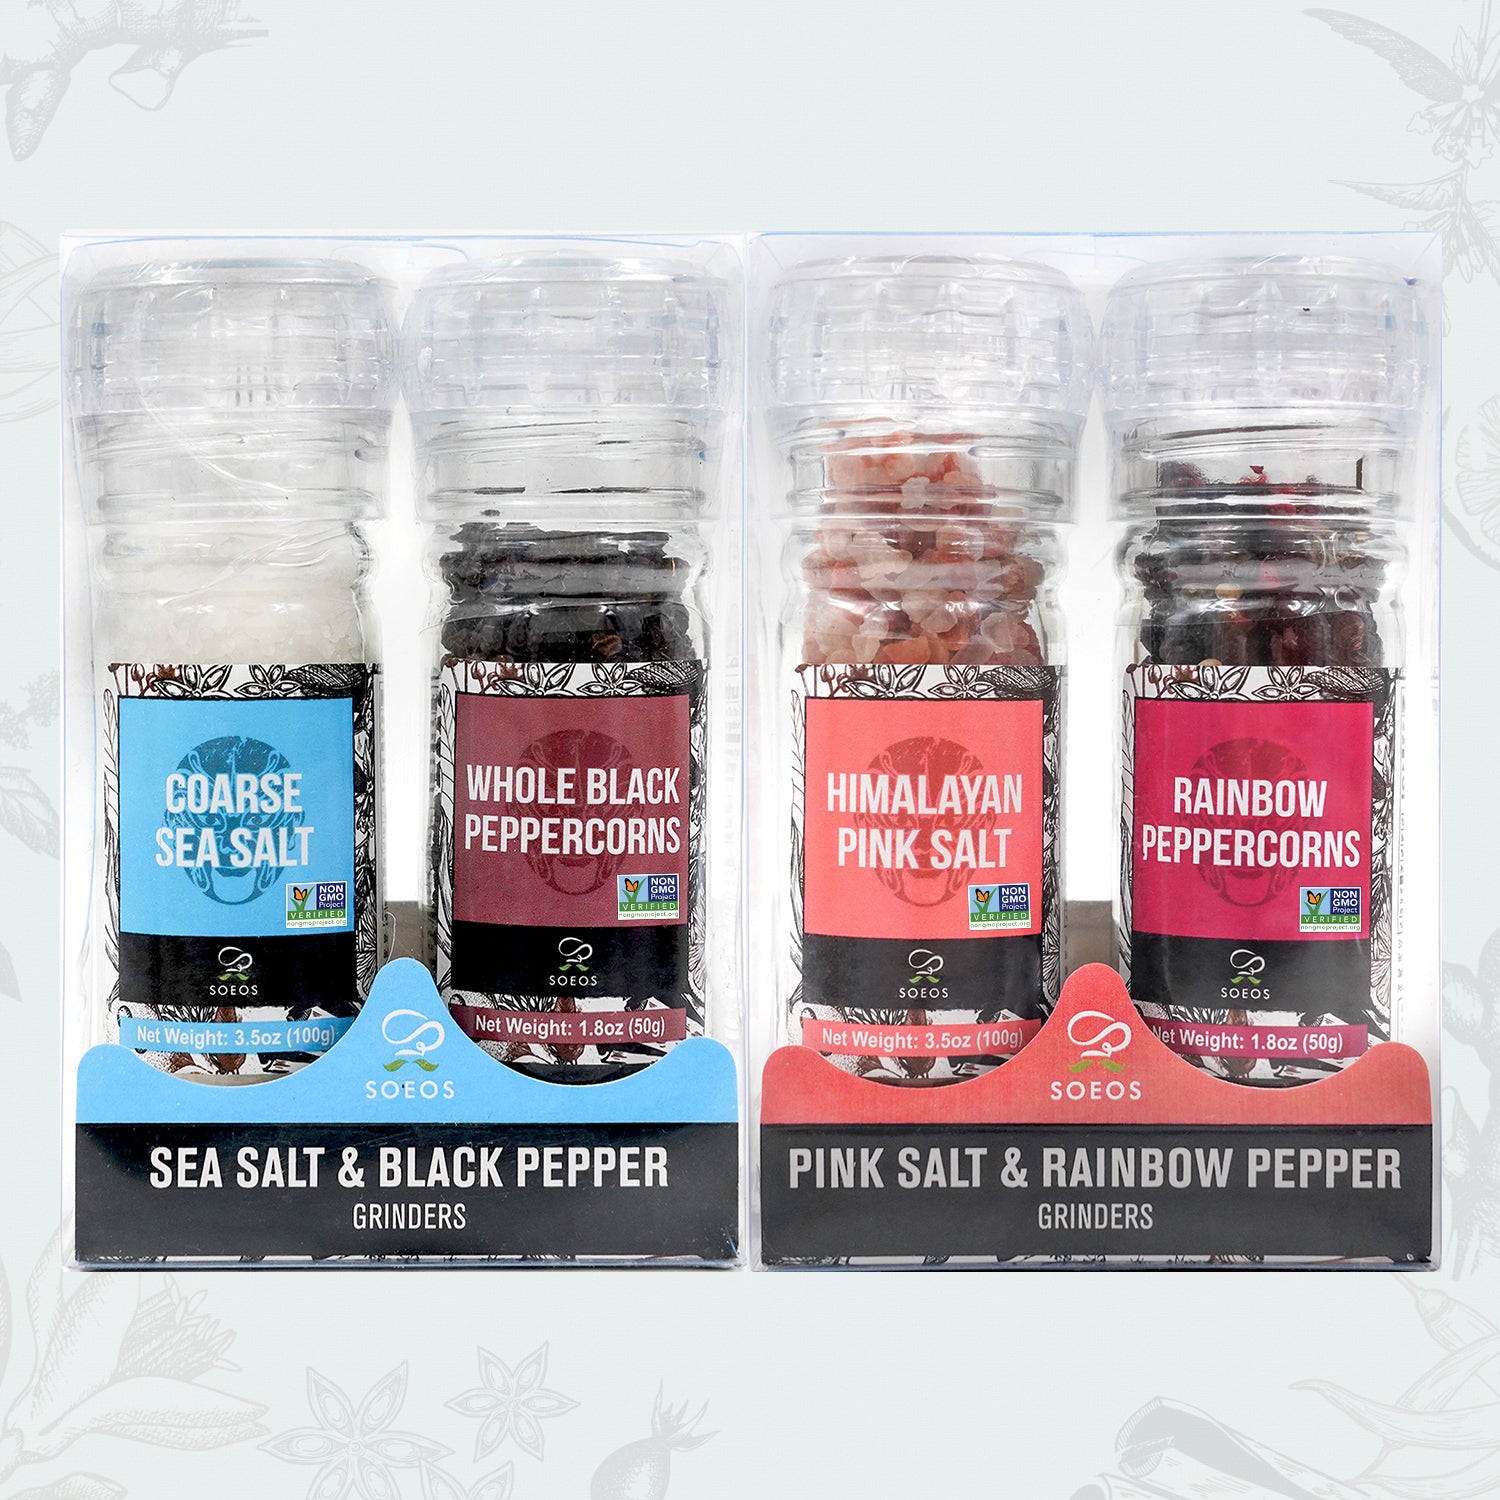 Coarse Sea Salt, 3.5oz+ Black Peppercorns, 1.8oz+ Pink Salt, 3.5oz + Rainbow Peppercorns, 1.8oz